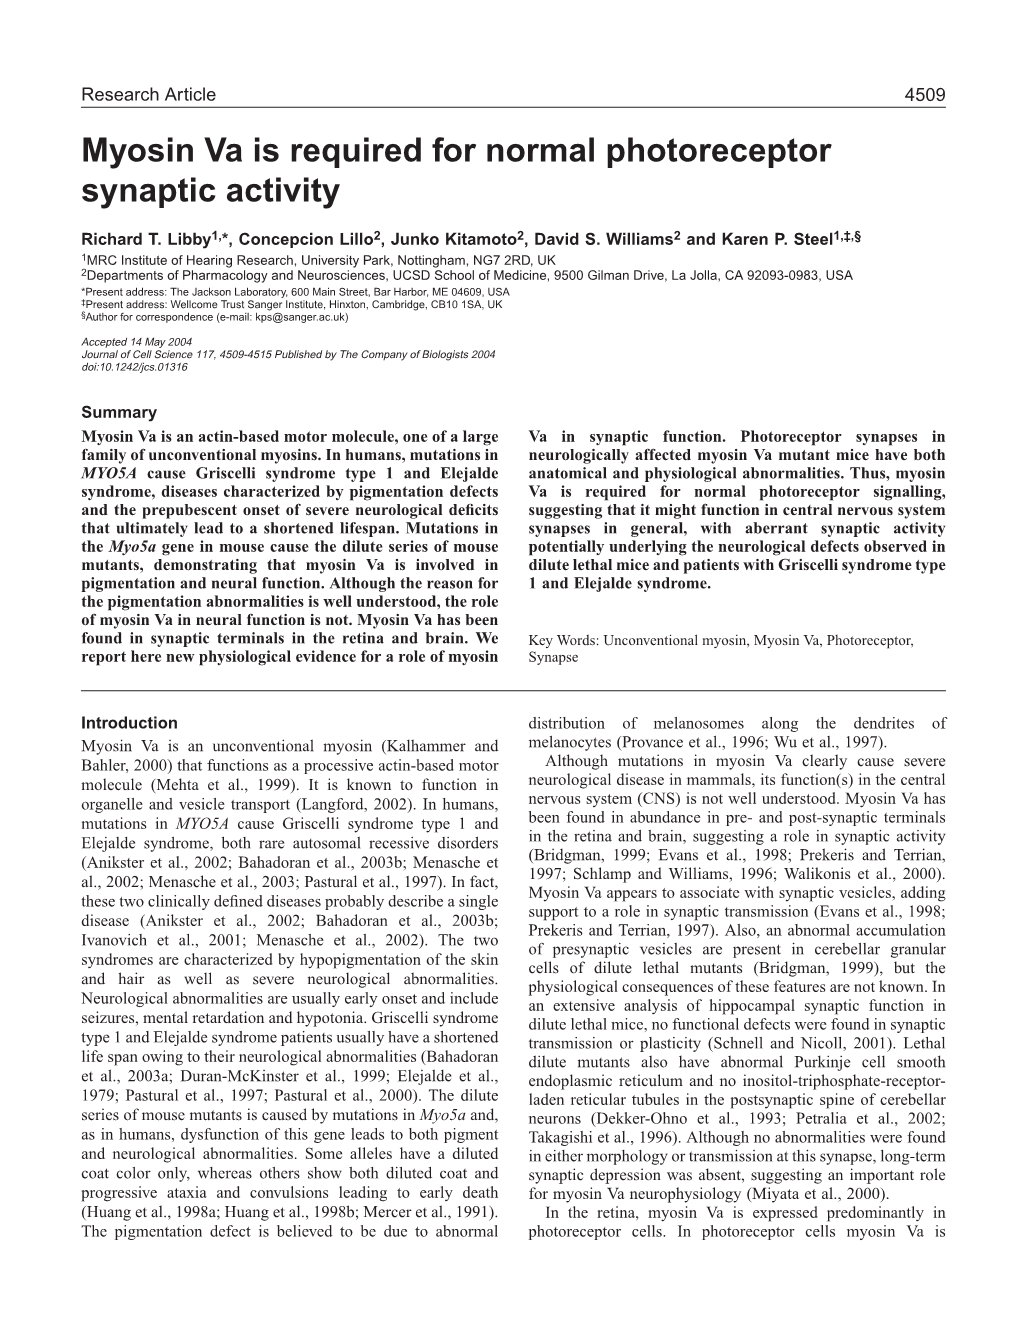 Myosin Va Is Required for Normal Photoreceptor Synaptic Activity